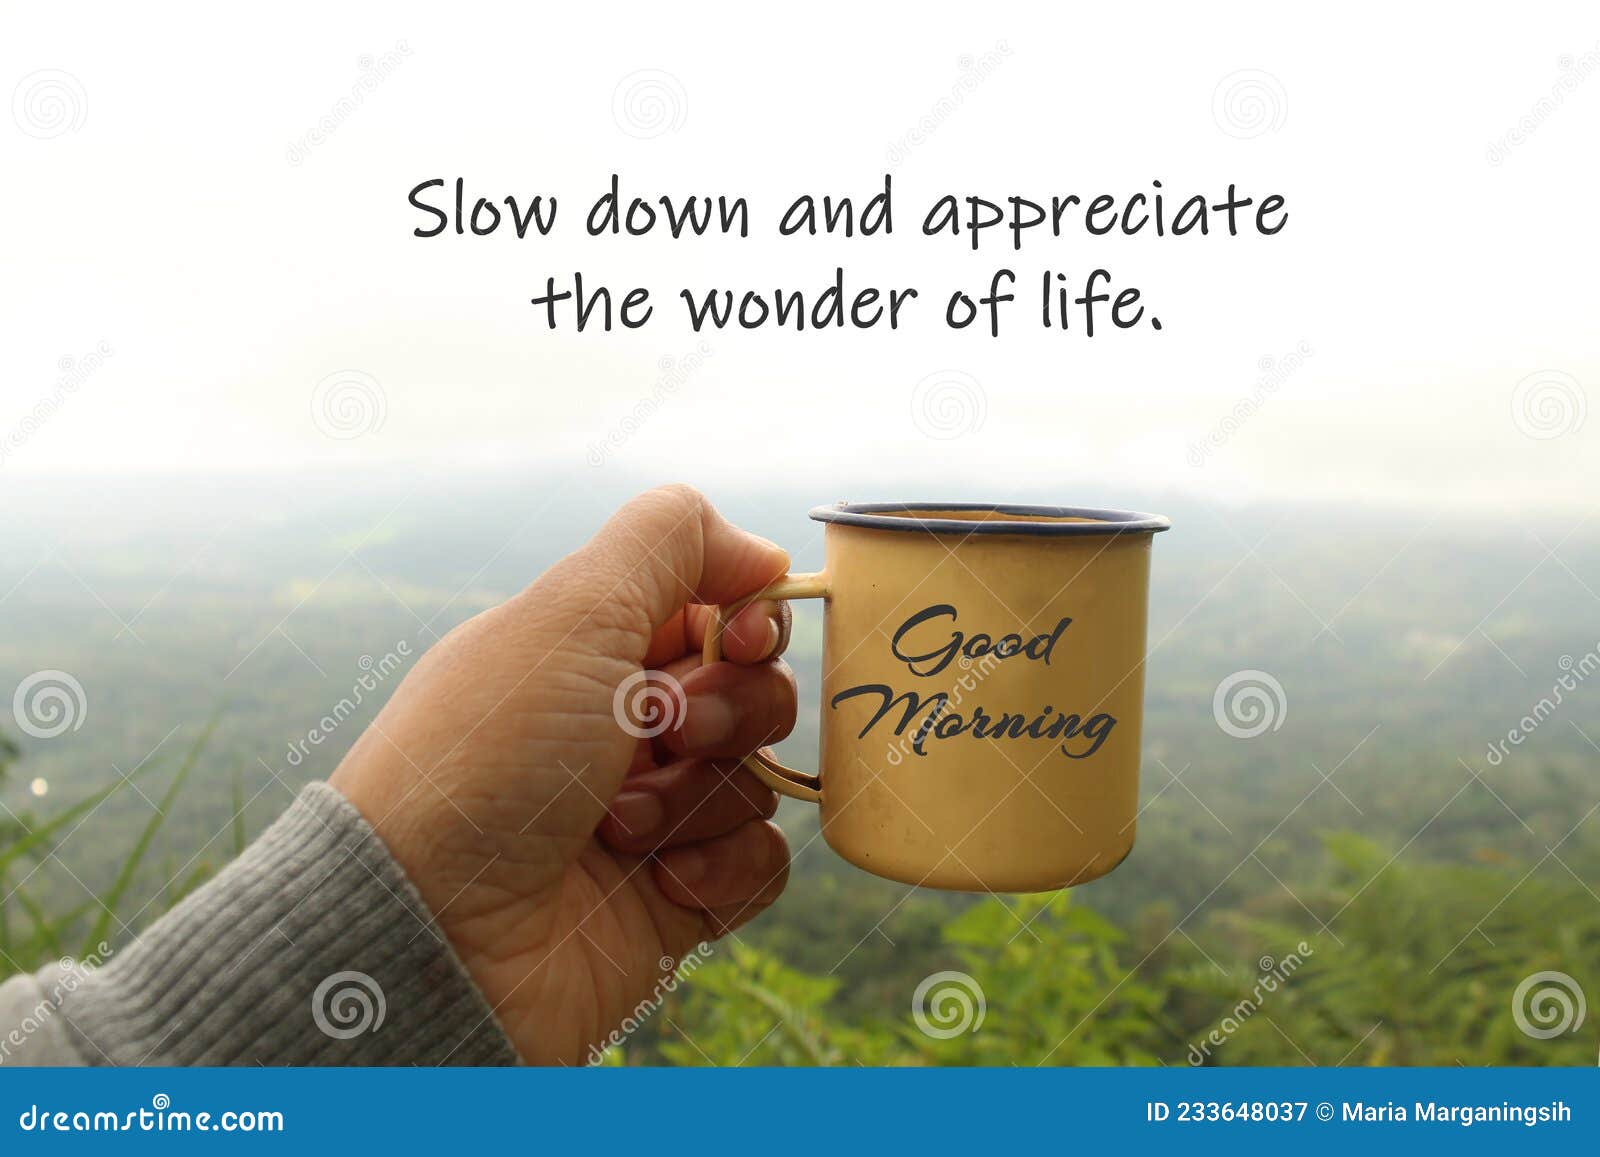 265 Inspirational Good Morning Quotes Stock Photos - Free ...